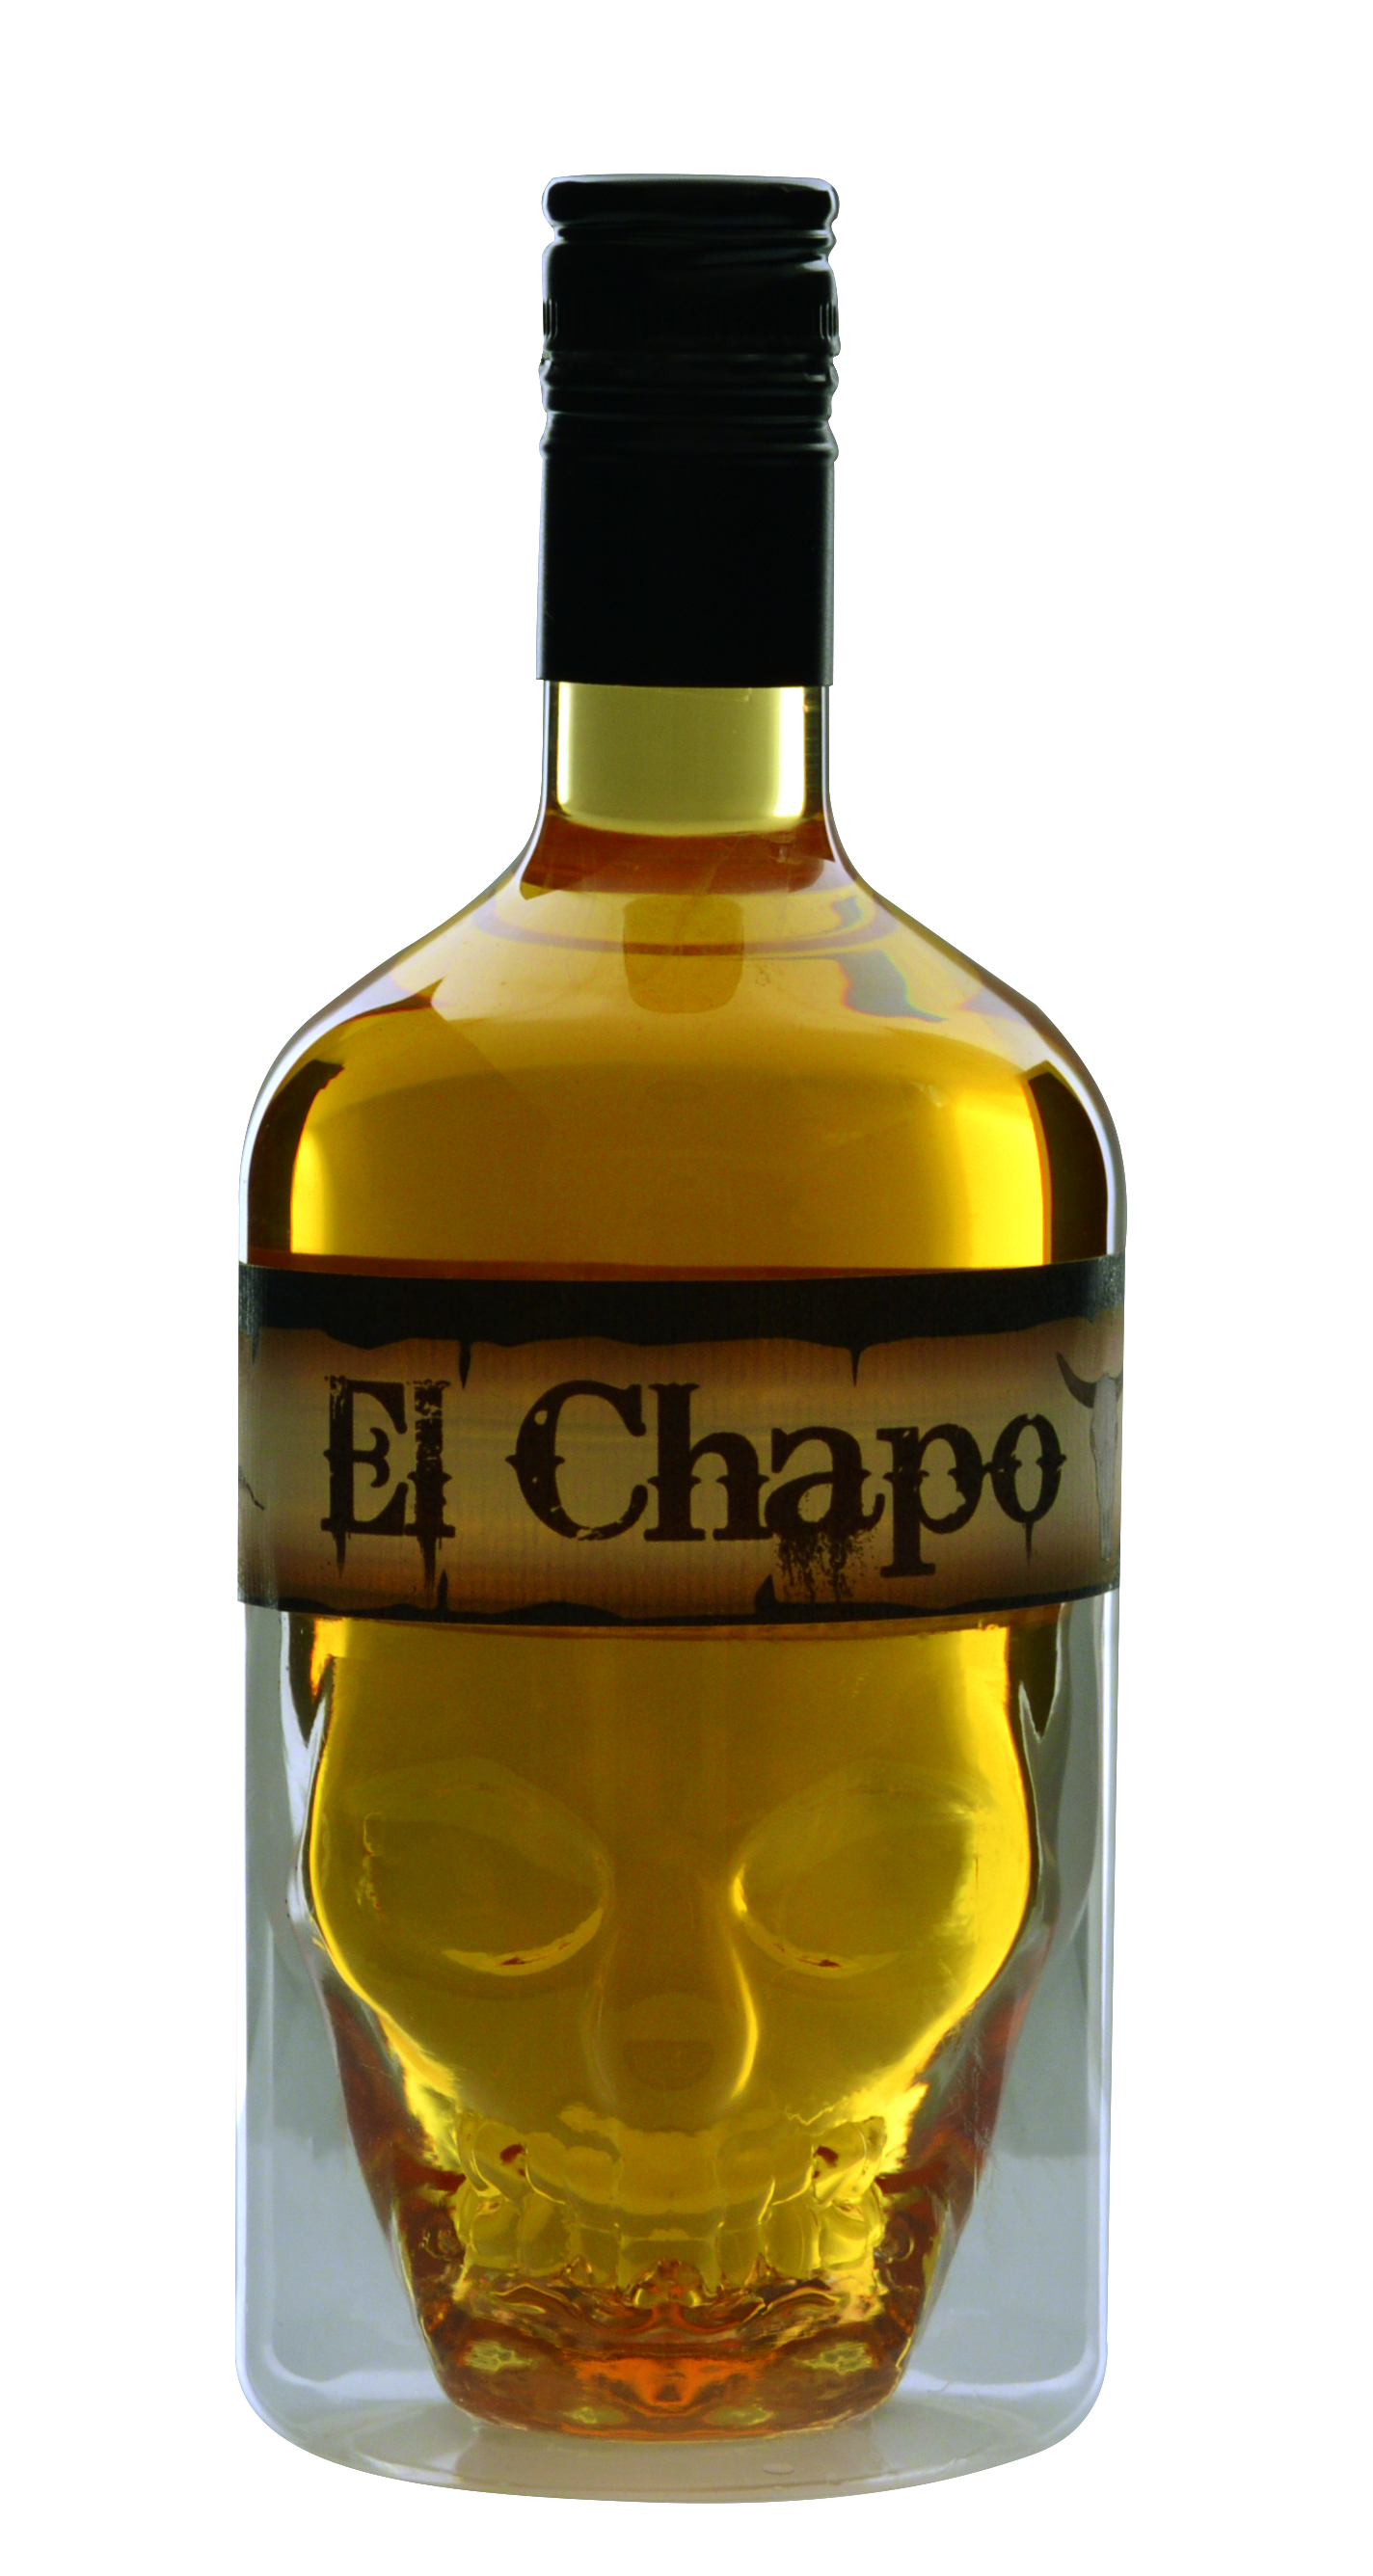 El Chapo - Tequila Orangen Likör- 0,7l 25%vol.